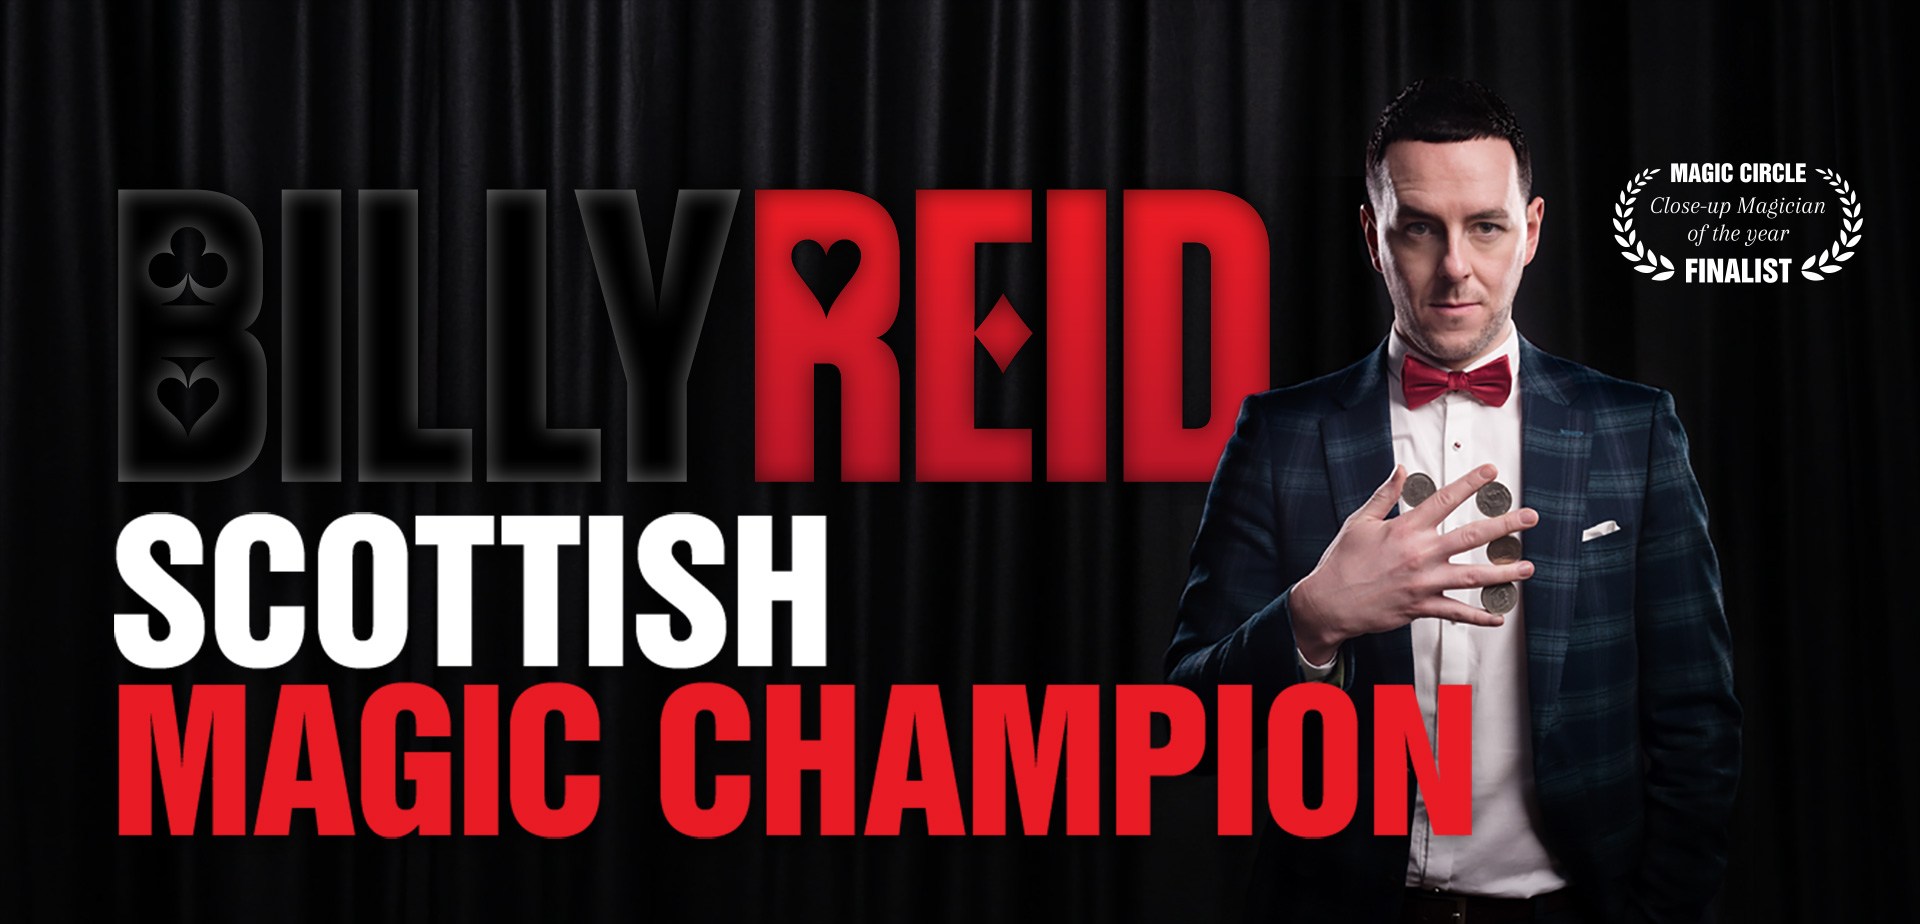 Billy Reid Scottish Magic Champion